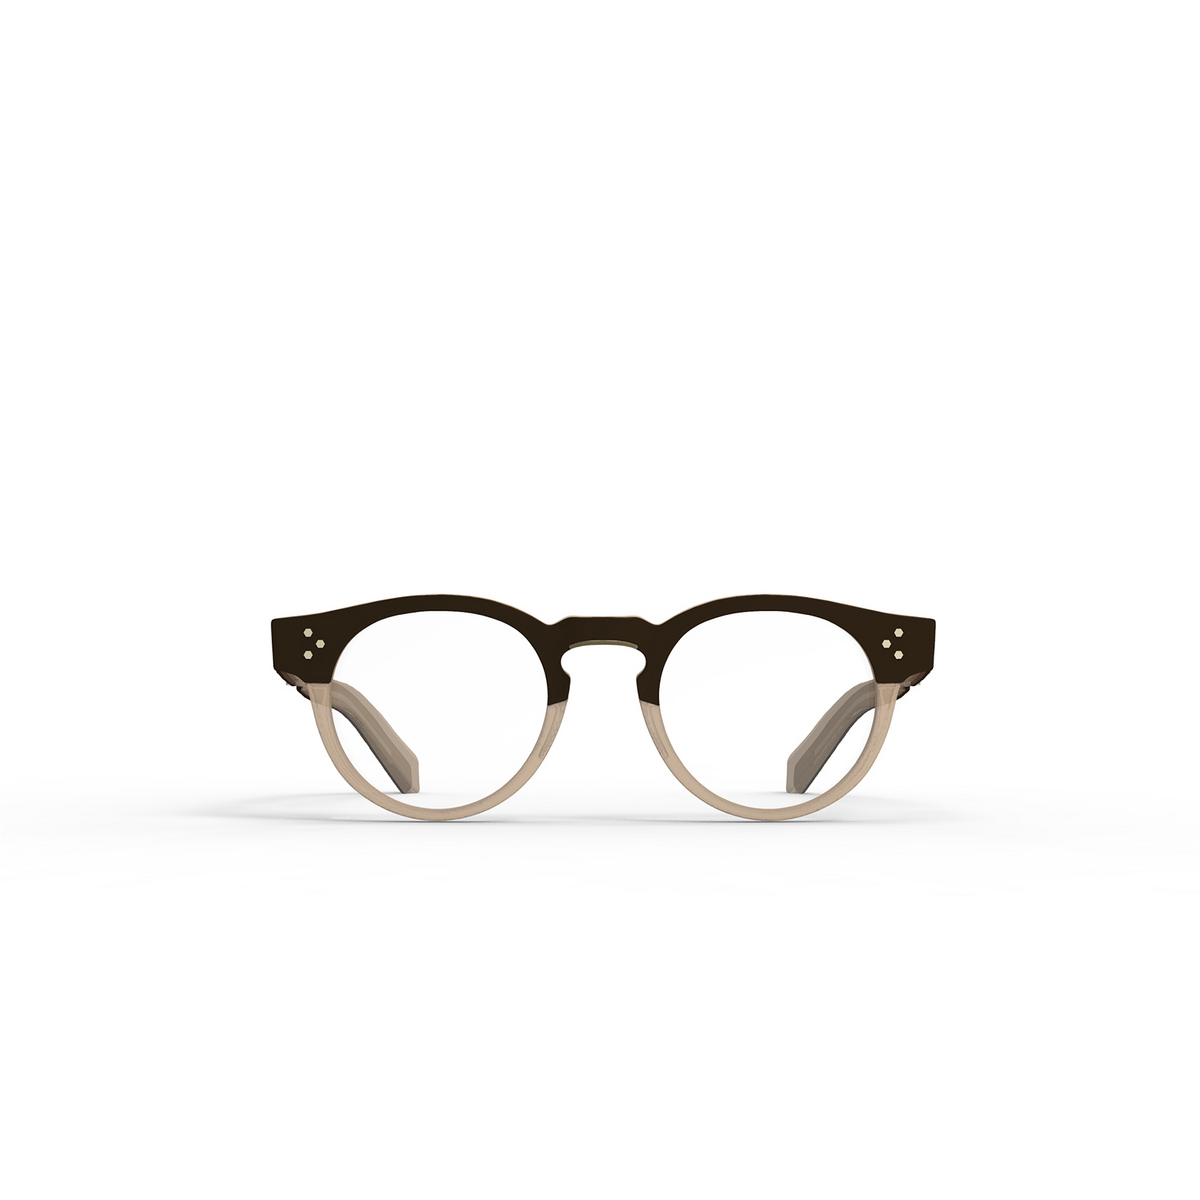 Mr. Leight KENNEDY C Eyeglasses BKTR-ATG Black Tar-Antique Gold - front view